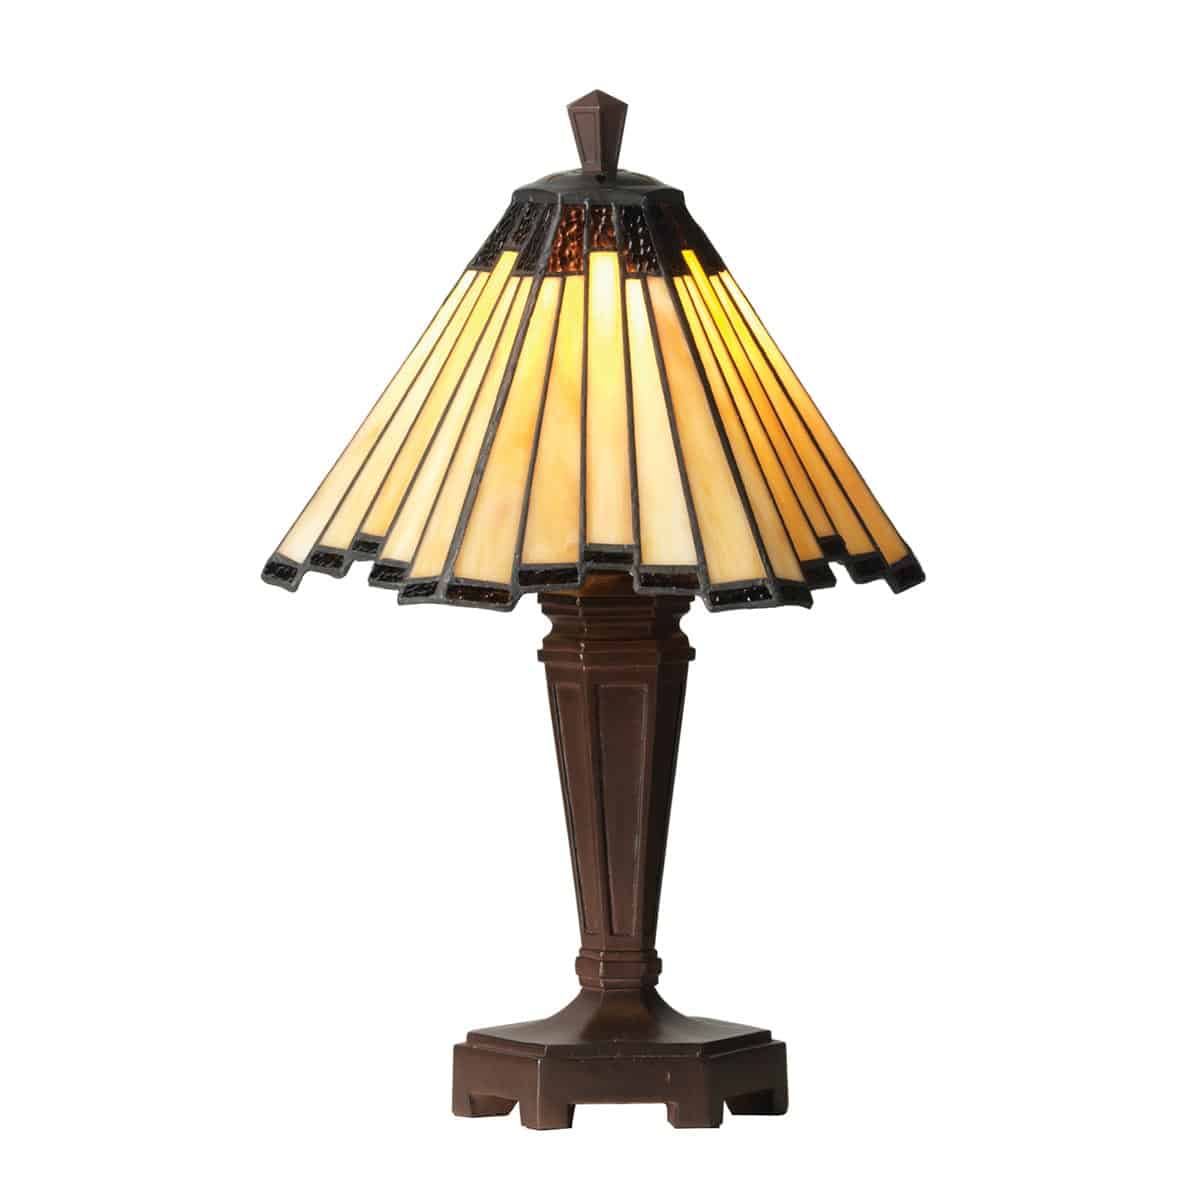 Feste Small Art Deco Style Tiffany Table Lamp Cream / Red